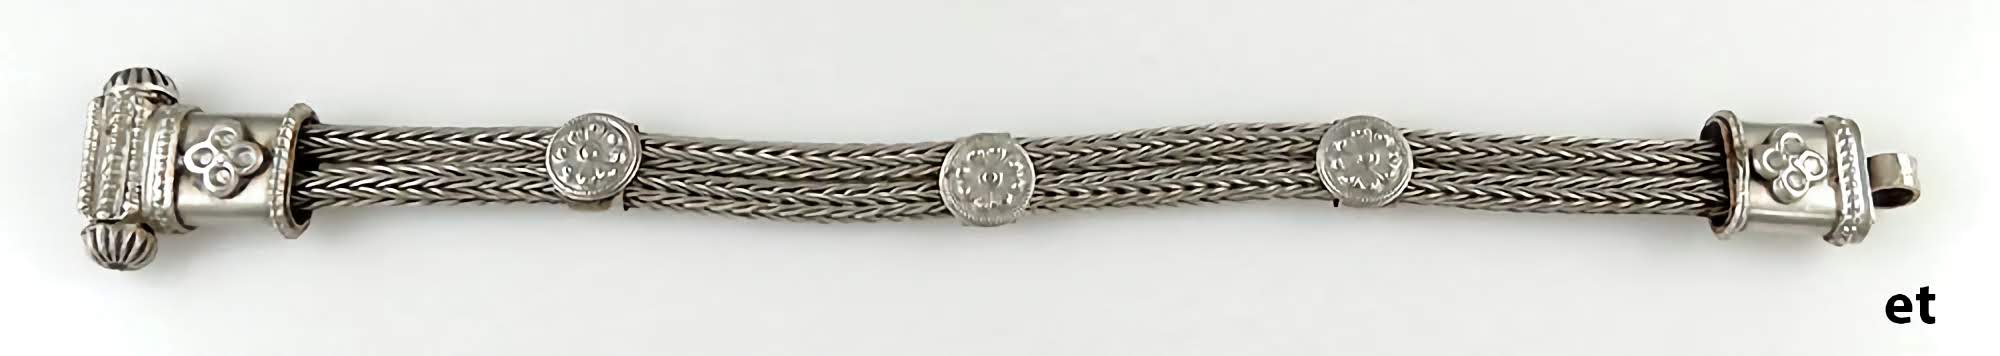 Hand Crafted Vintage 1920s Tibetan Silver Roped Flower Bracelet